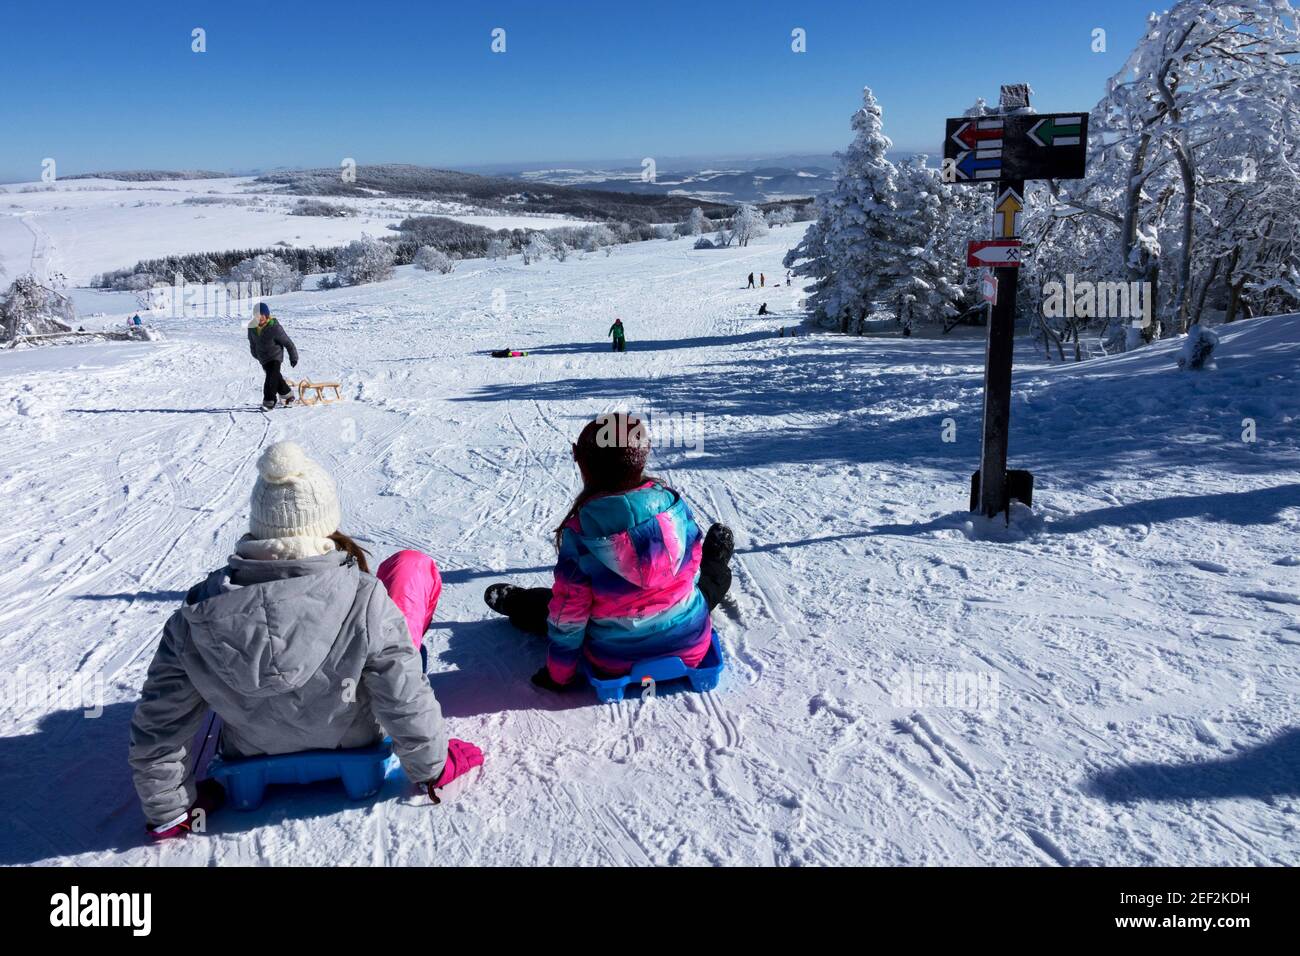 Children sledding in winter snow downhill nice weather Stock Photo